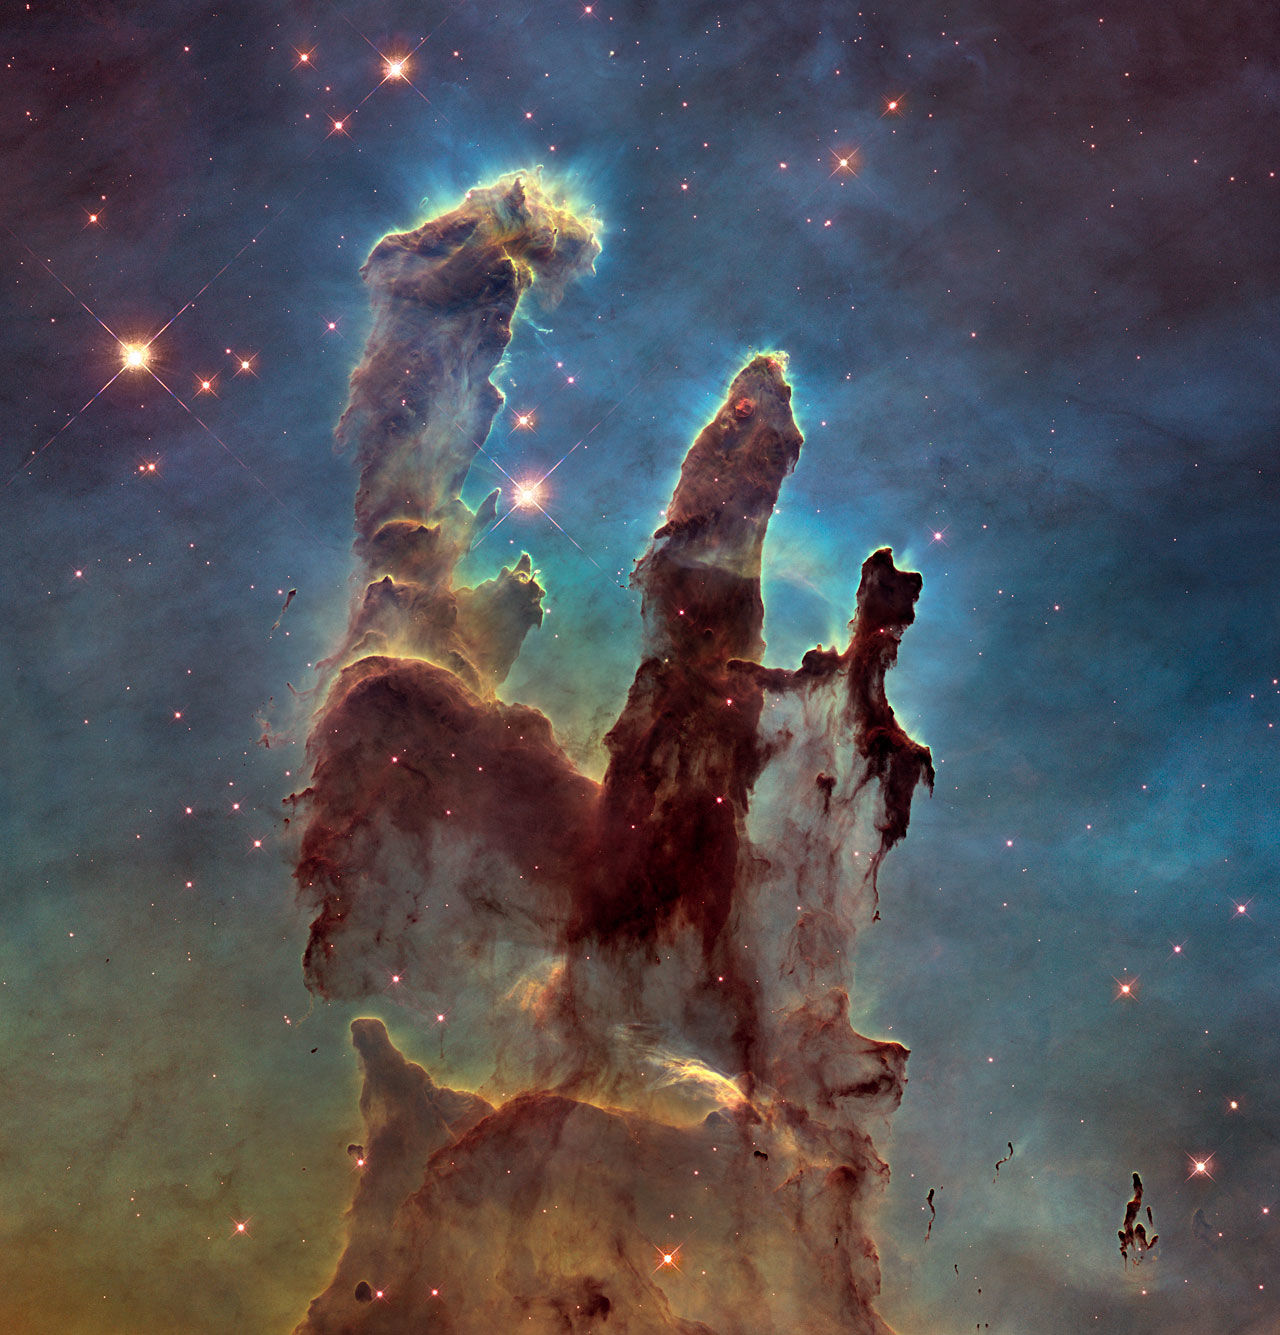 Fotografie z kosmicznego Teleskopu Hubble’a